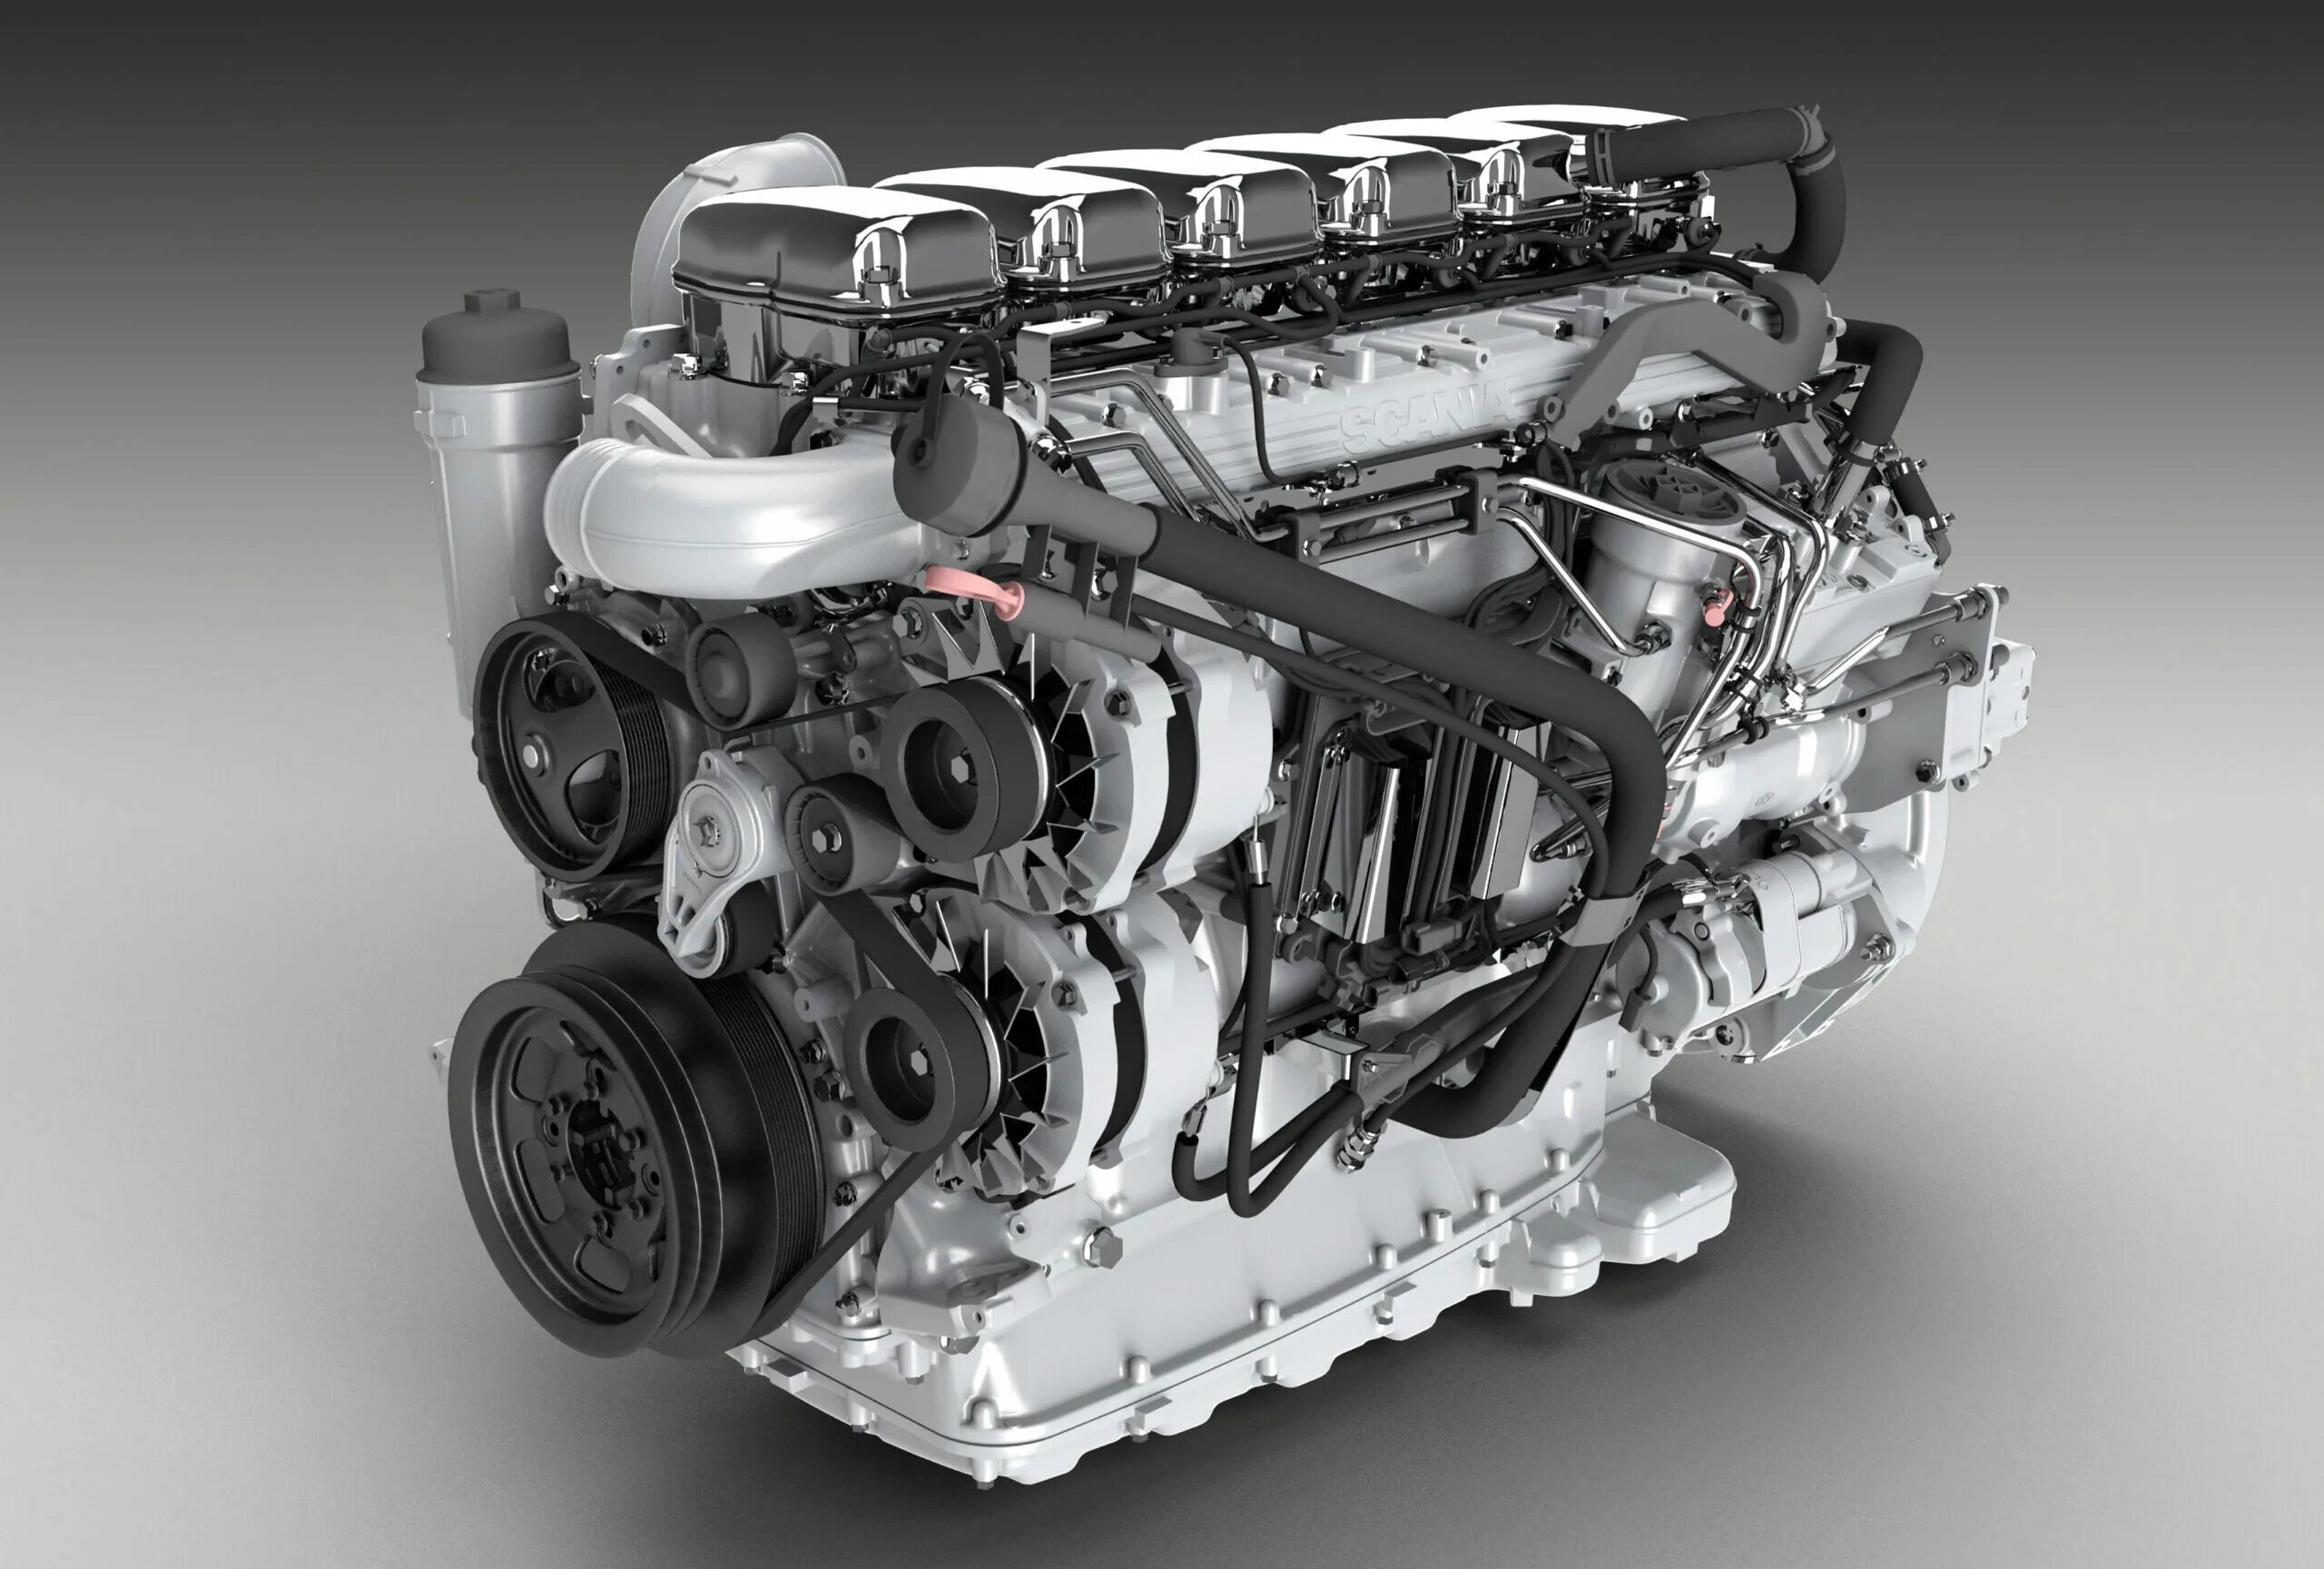 Мотор Мерседес 6 цилиндровый. Рядный 6 цилиндровый двигатель Мерседес. Двигатель Мерседес 6 цилиндровый дизель v. Новый рядный 6 цилиндровый двигатель Mazda. Дизельный мотор мерседес